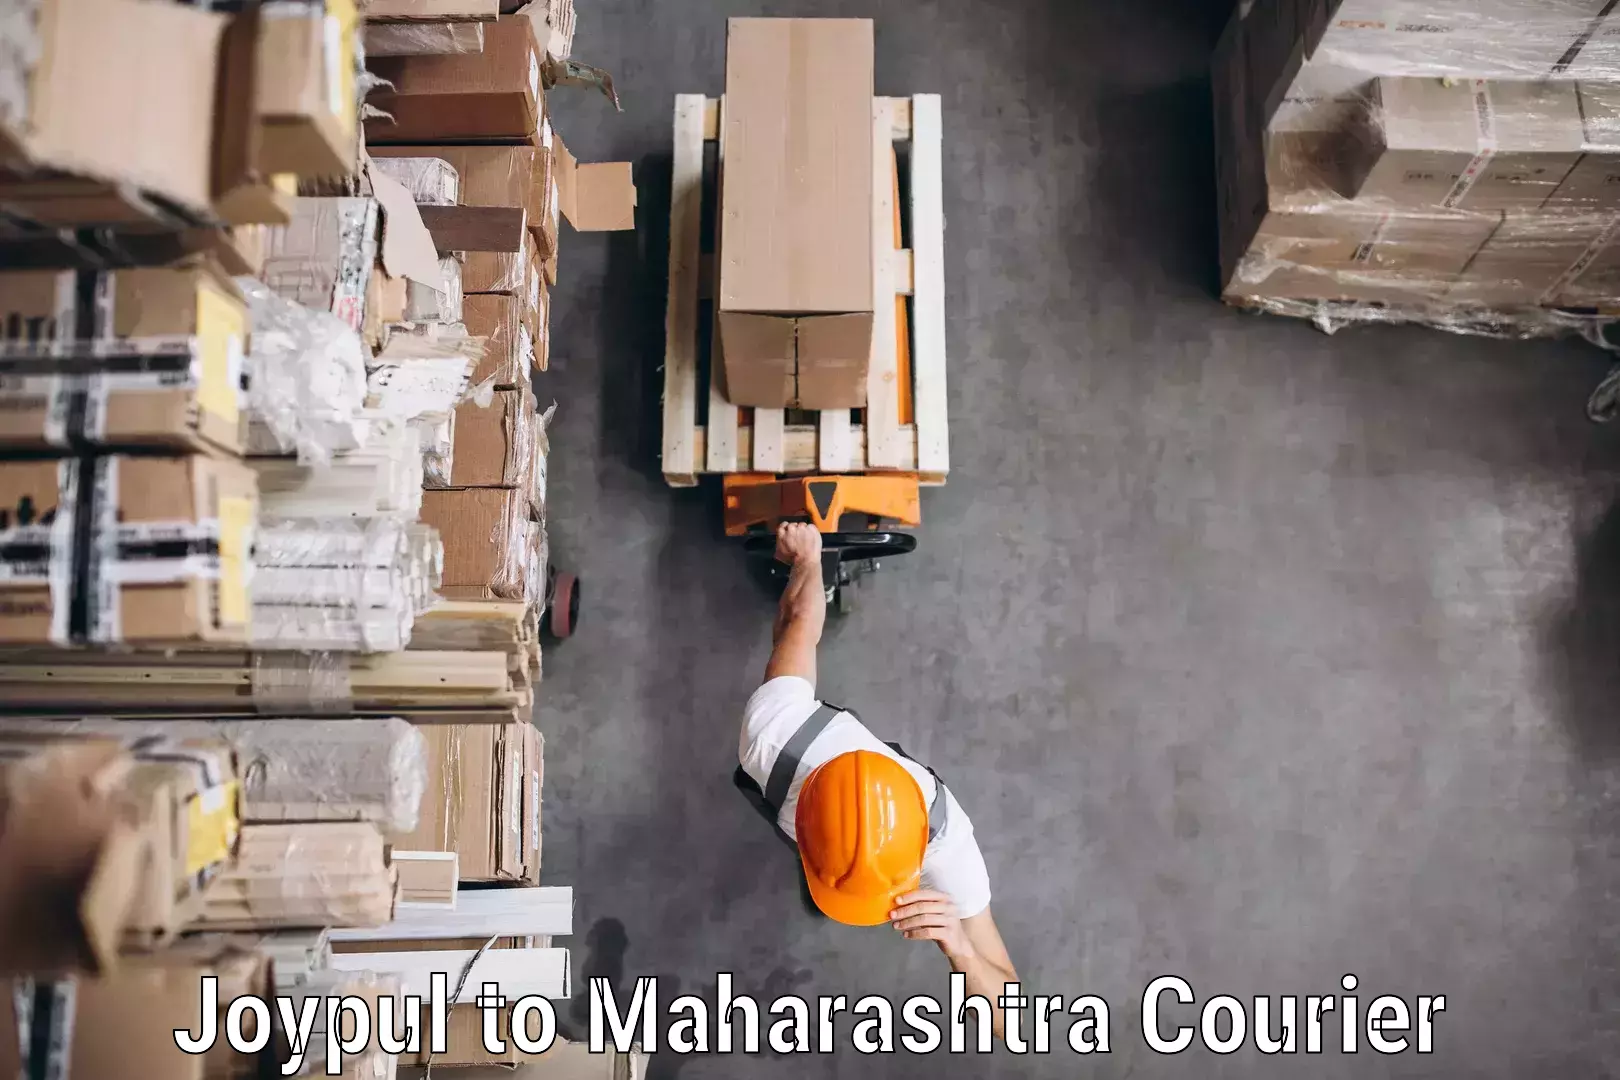 On-demand shipping options Joypul to Maharashtra